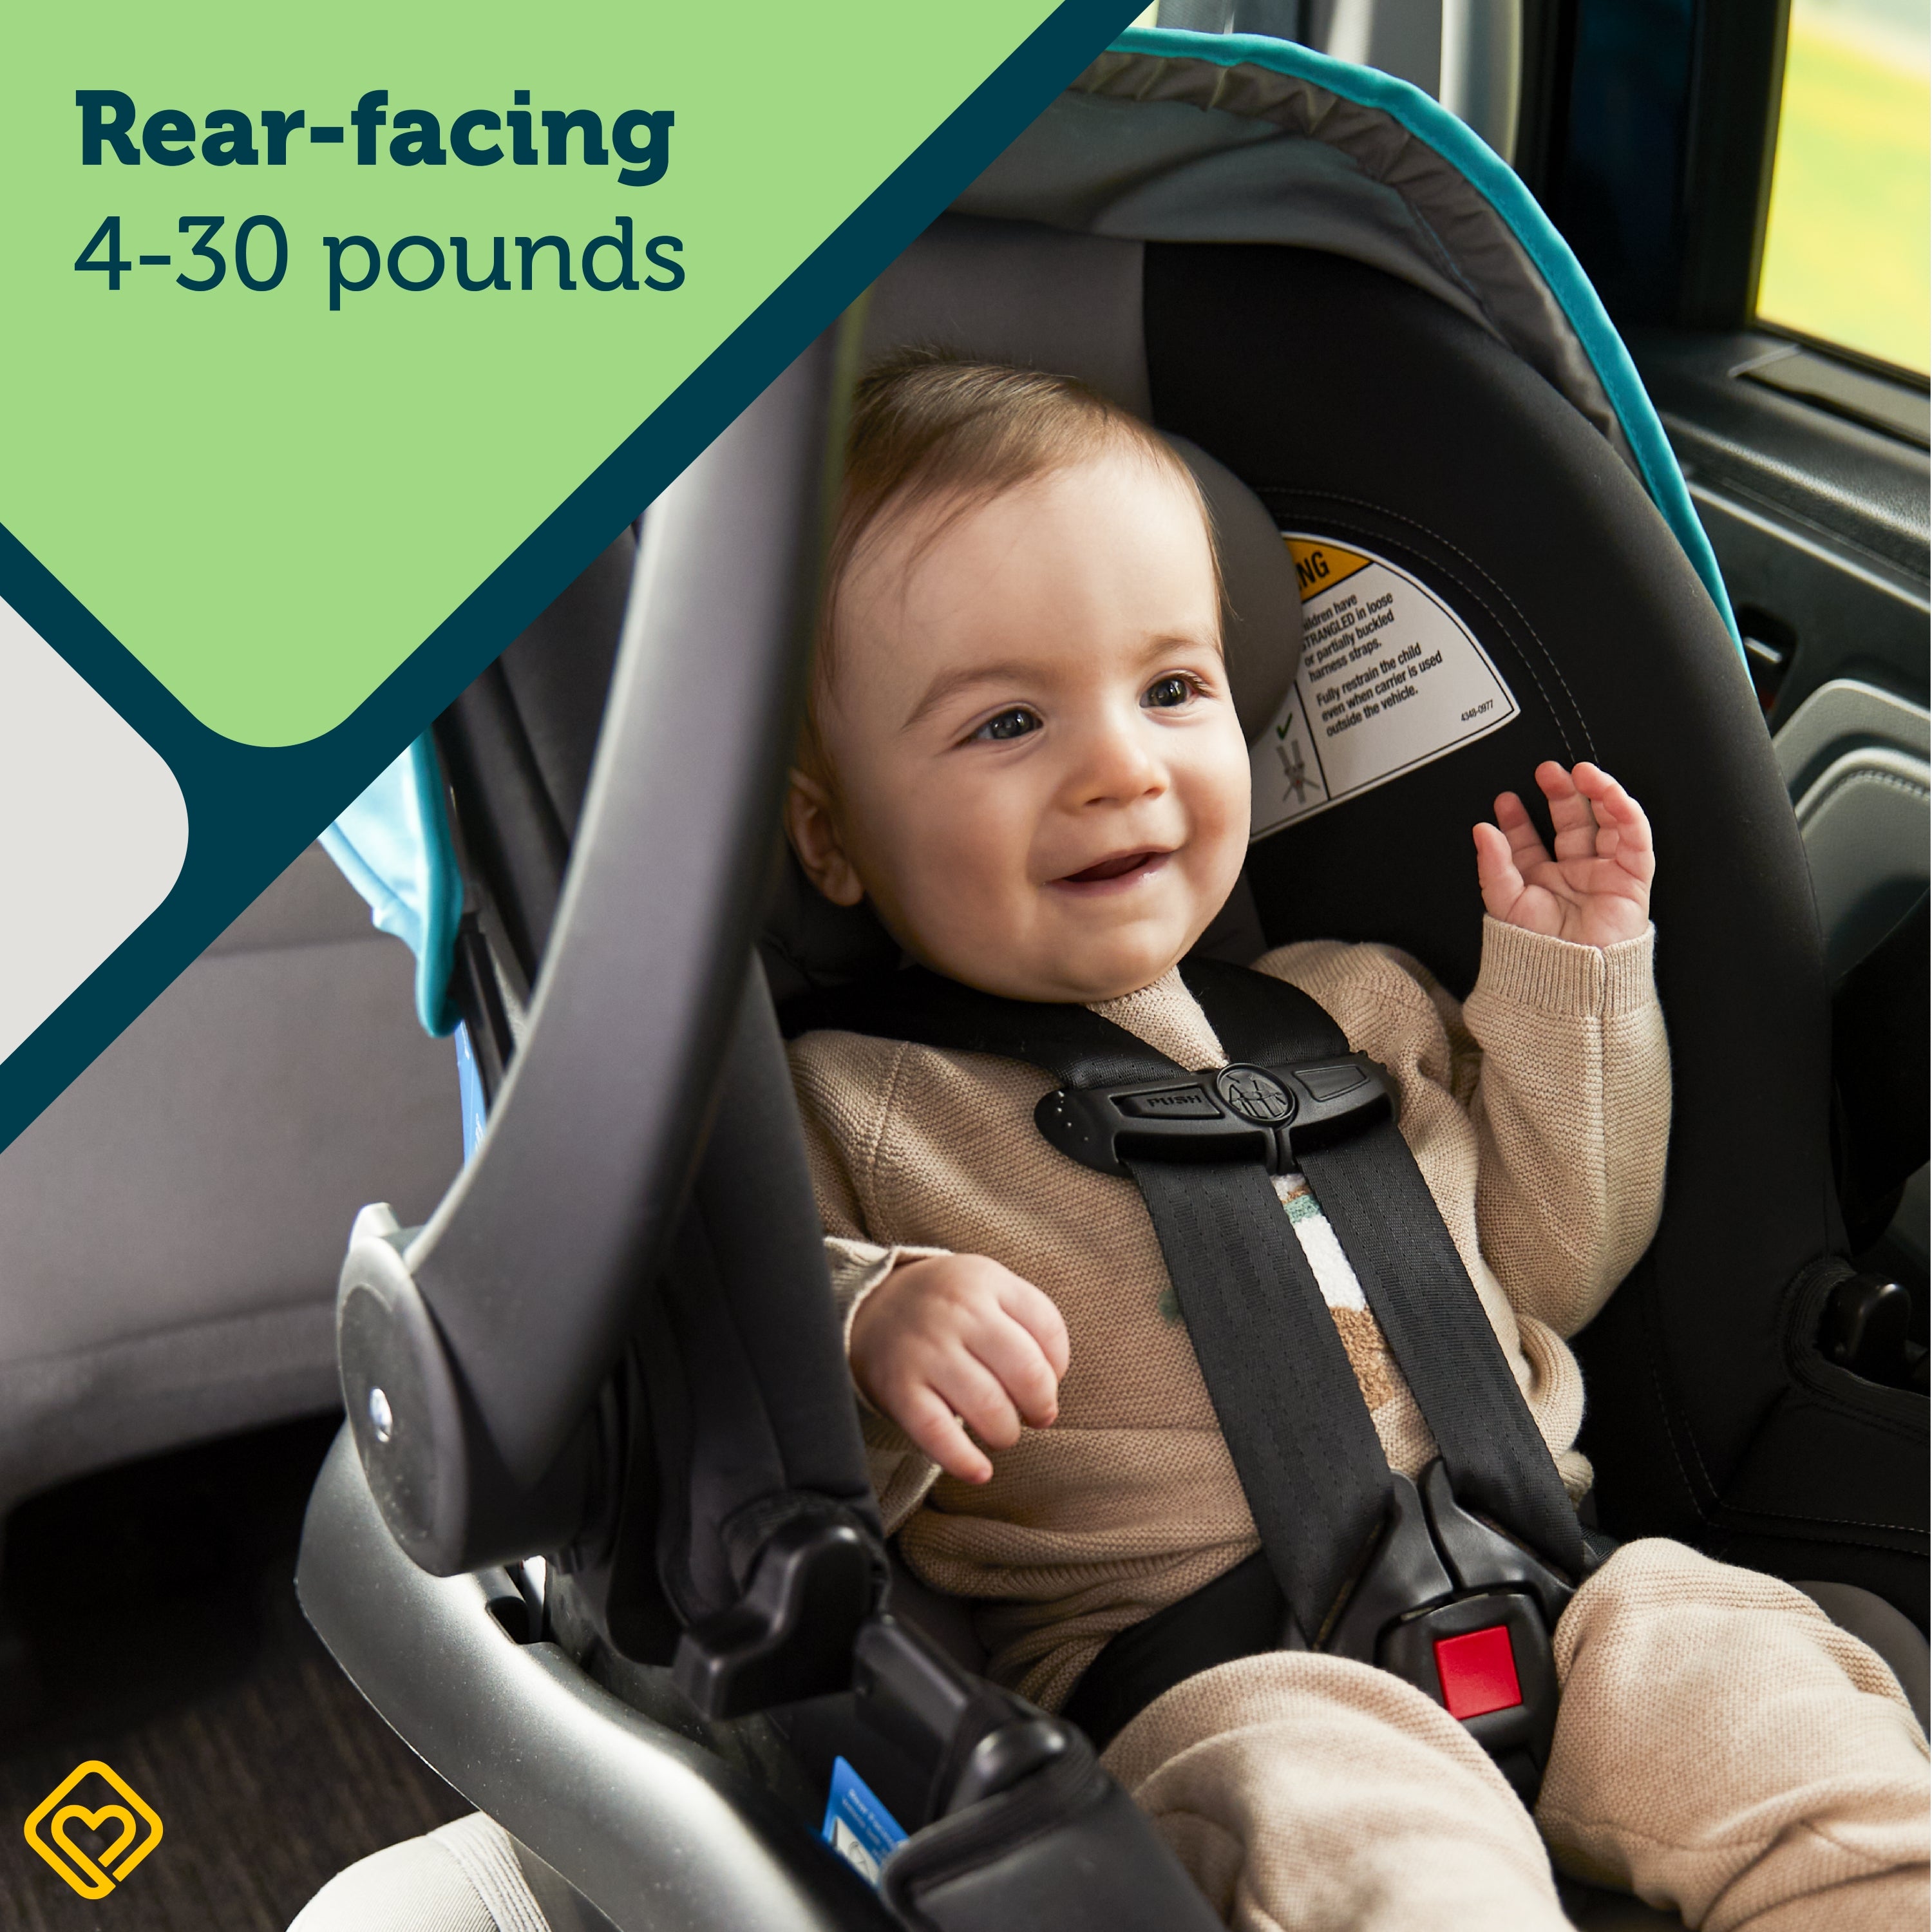 OnBoard LT Infant Car Seat - rear-facing 4-30 lbs.